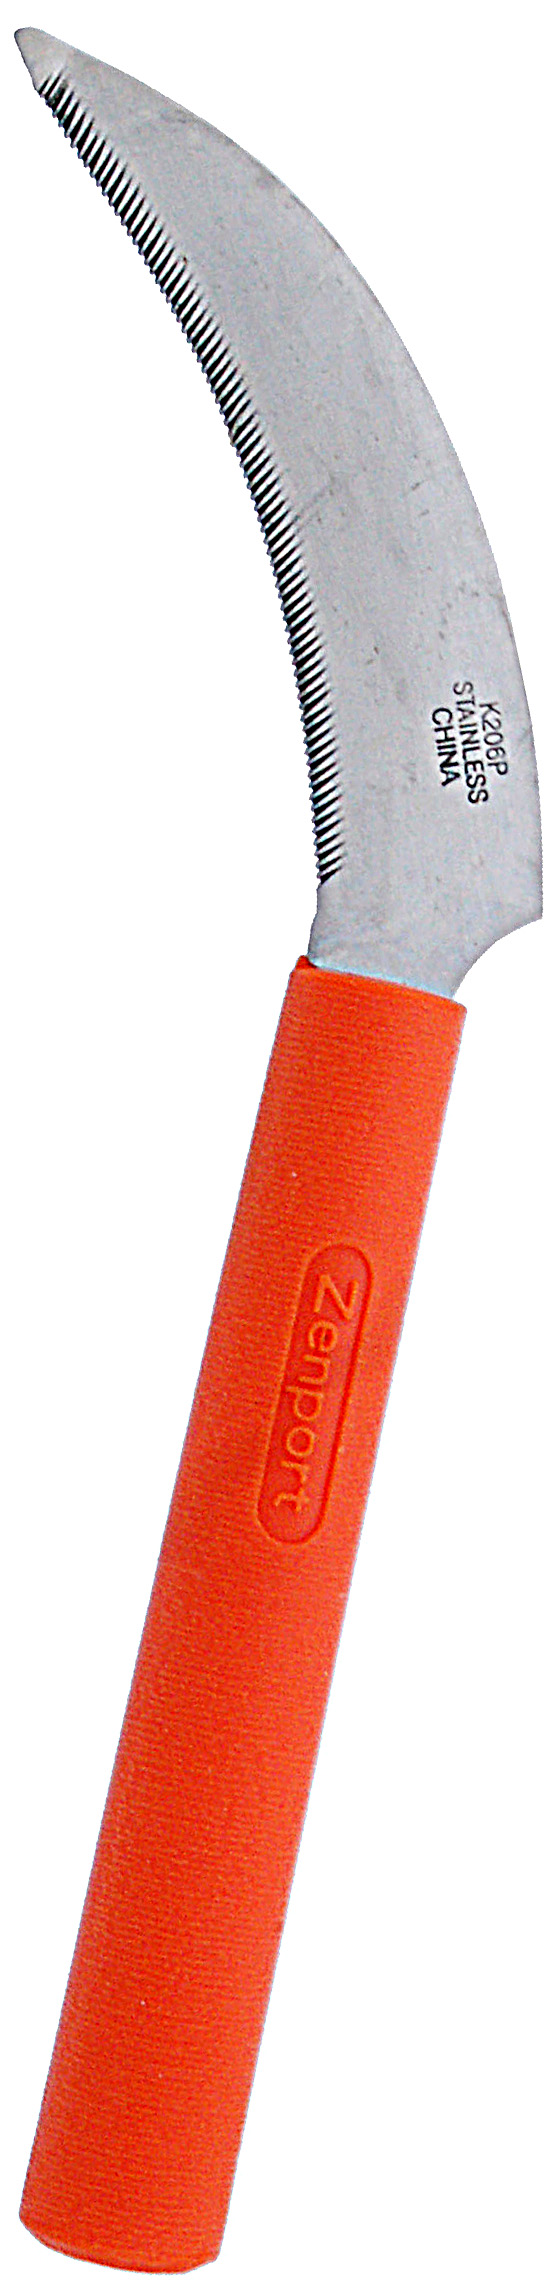 Zenport Sickle K206C Berry Knife/Weeding, Orange Plastic Handle, A+ Grade, Stainless Steel, Light Serration, 4.3-Inch Blade